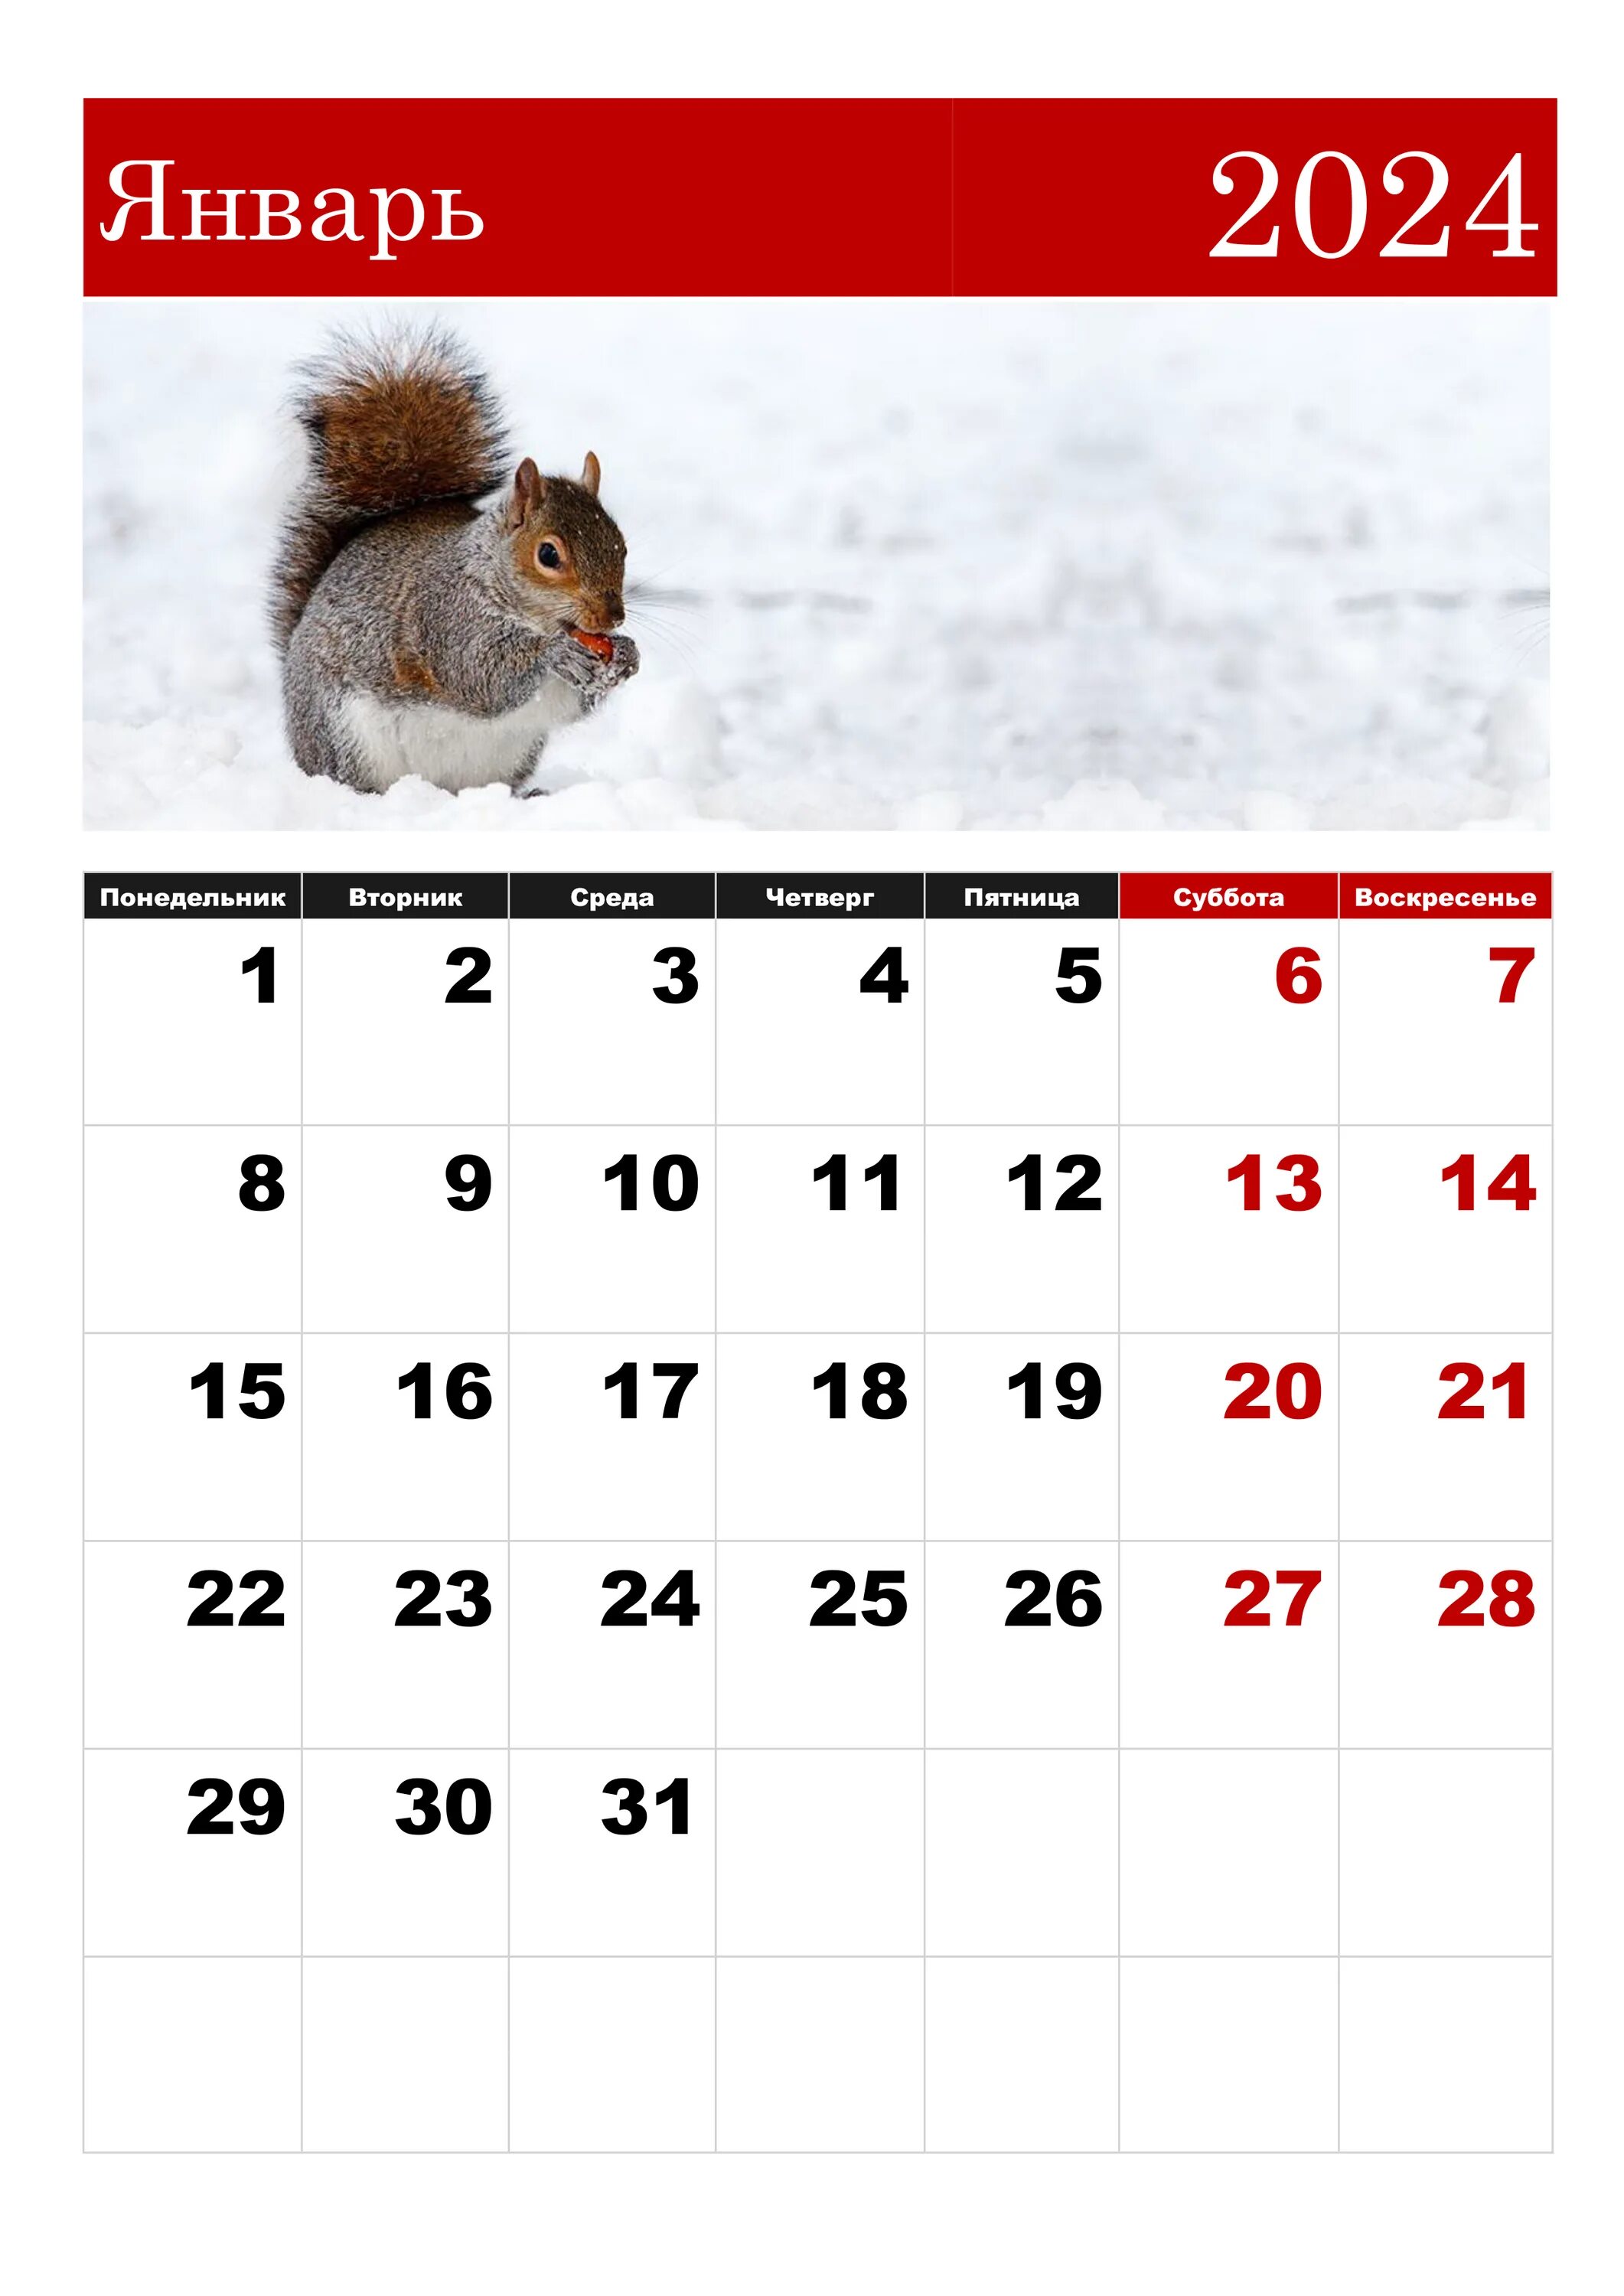 Календарь 2024 3 месяца. Календарная январь 2024. ЯНВАРЬРЬ 2024. Календарь январь. Календарь на январь 2024 года.